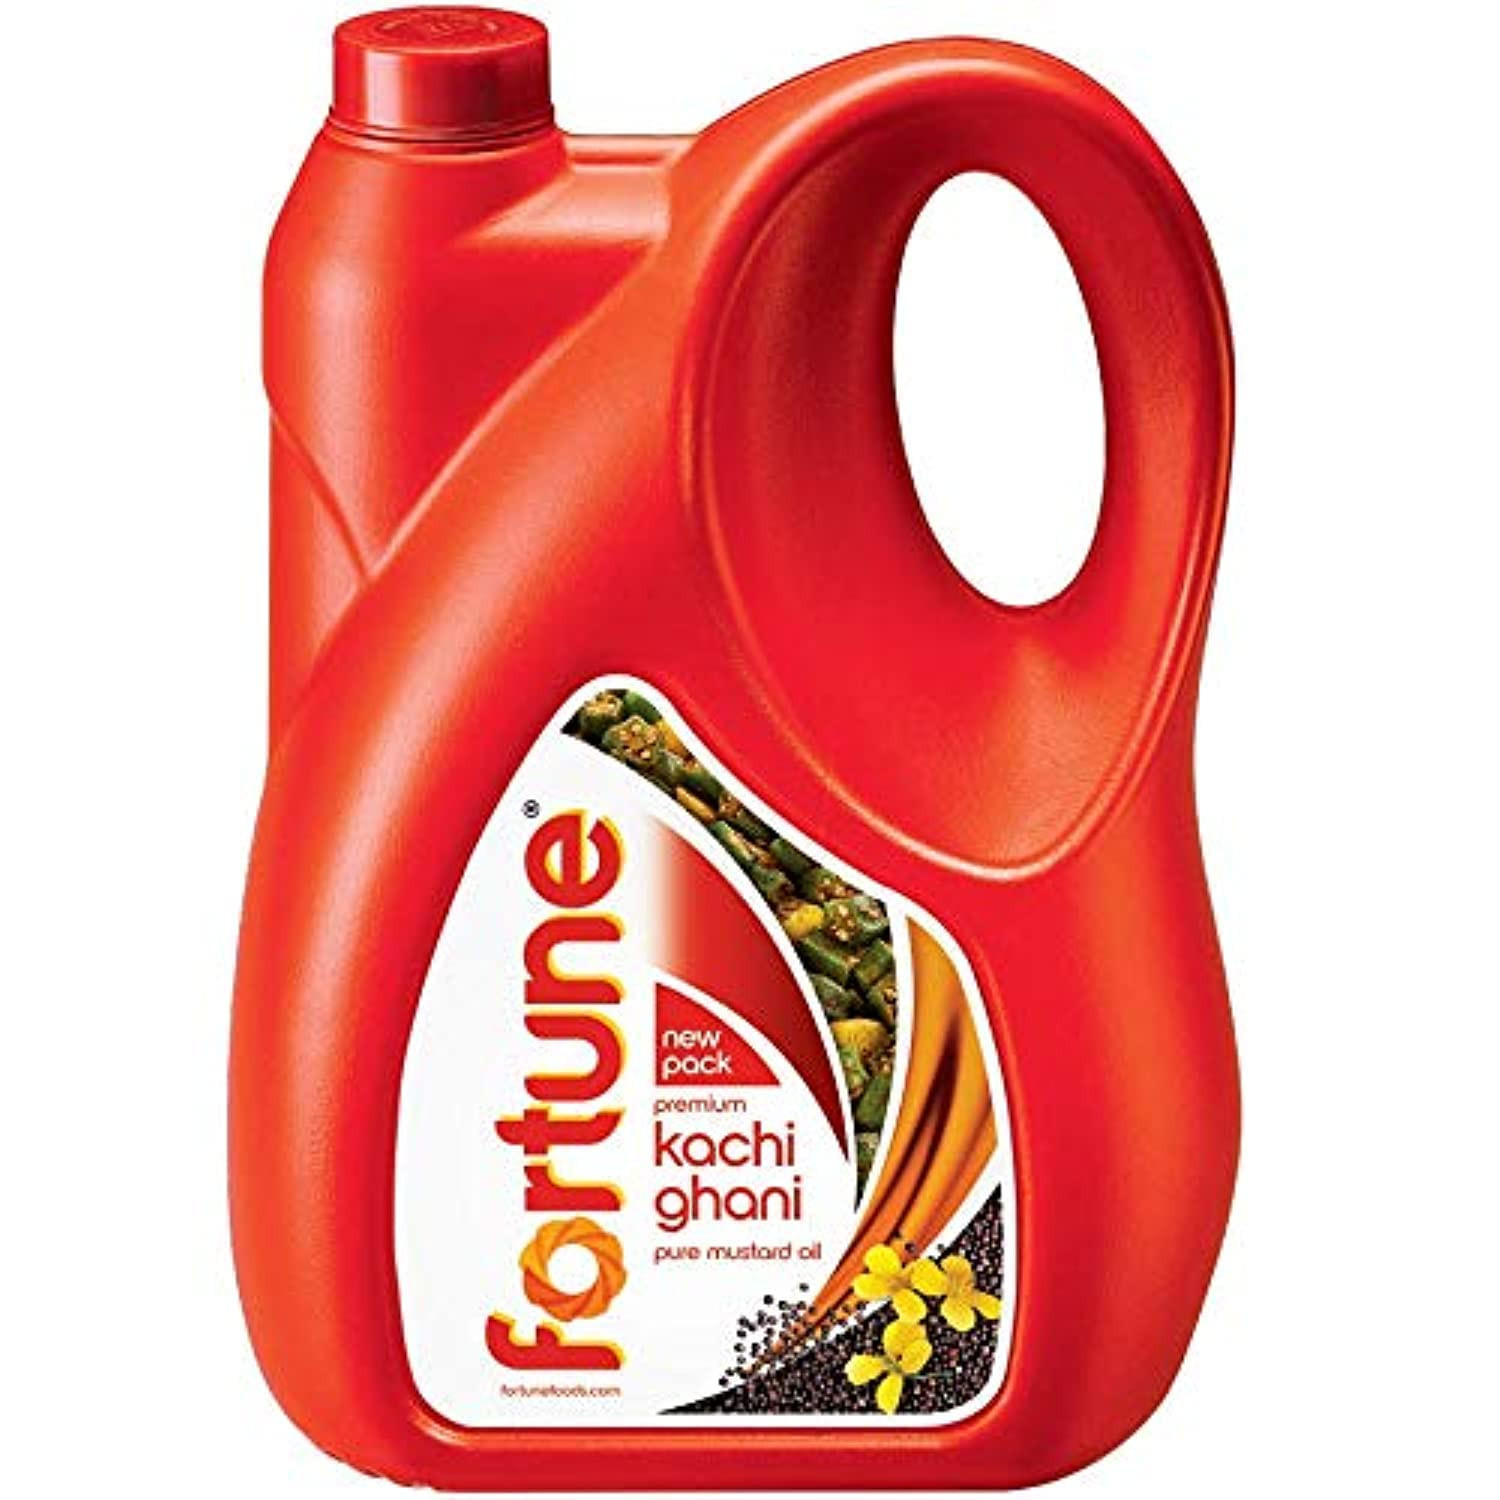 Fortune Premium Kachi Ghani Pure Mustard Oil, 5 Ltr Jar